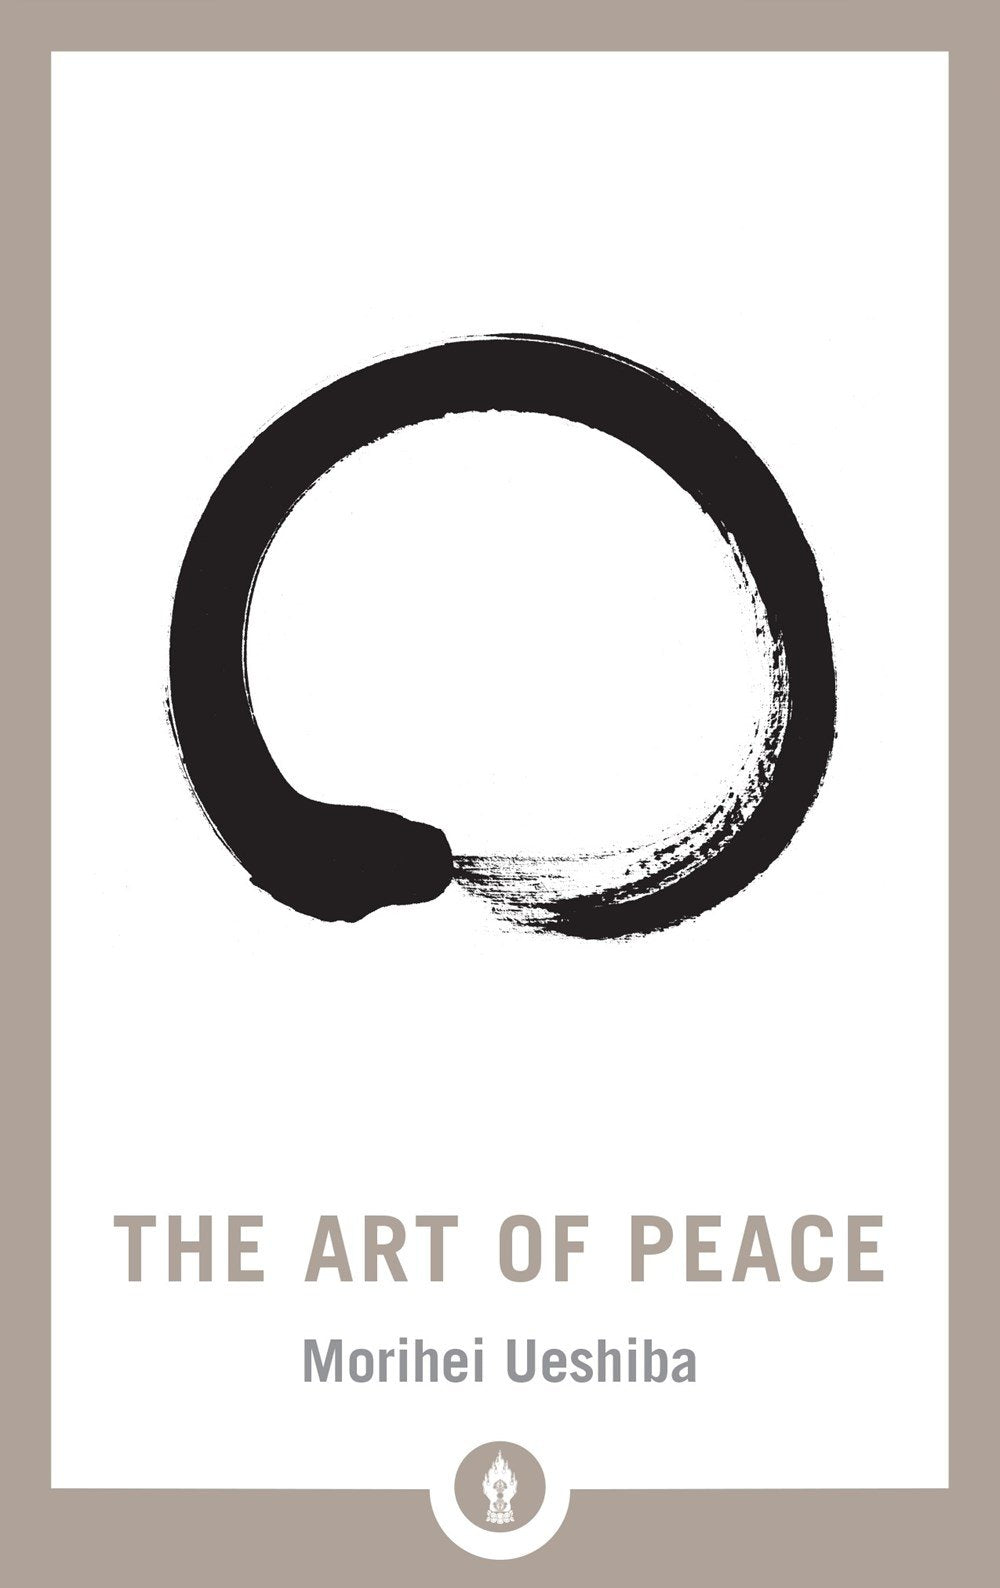 The Art of Peace [Morihei Ueshiba, translated by John Stevens]